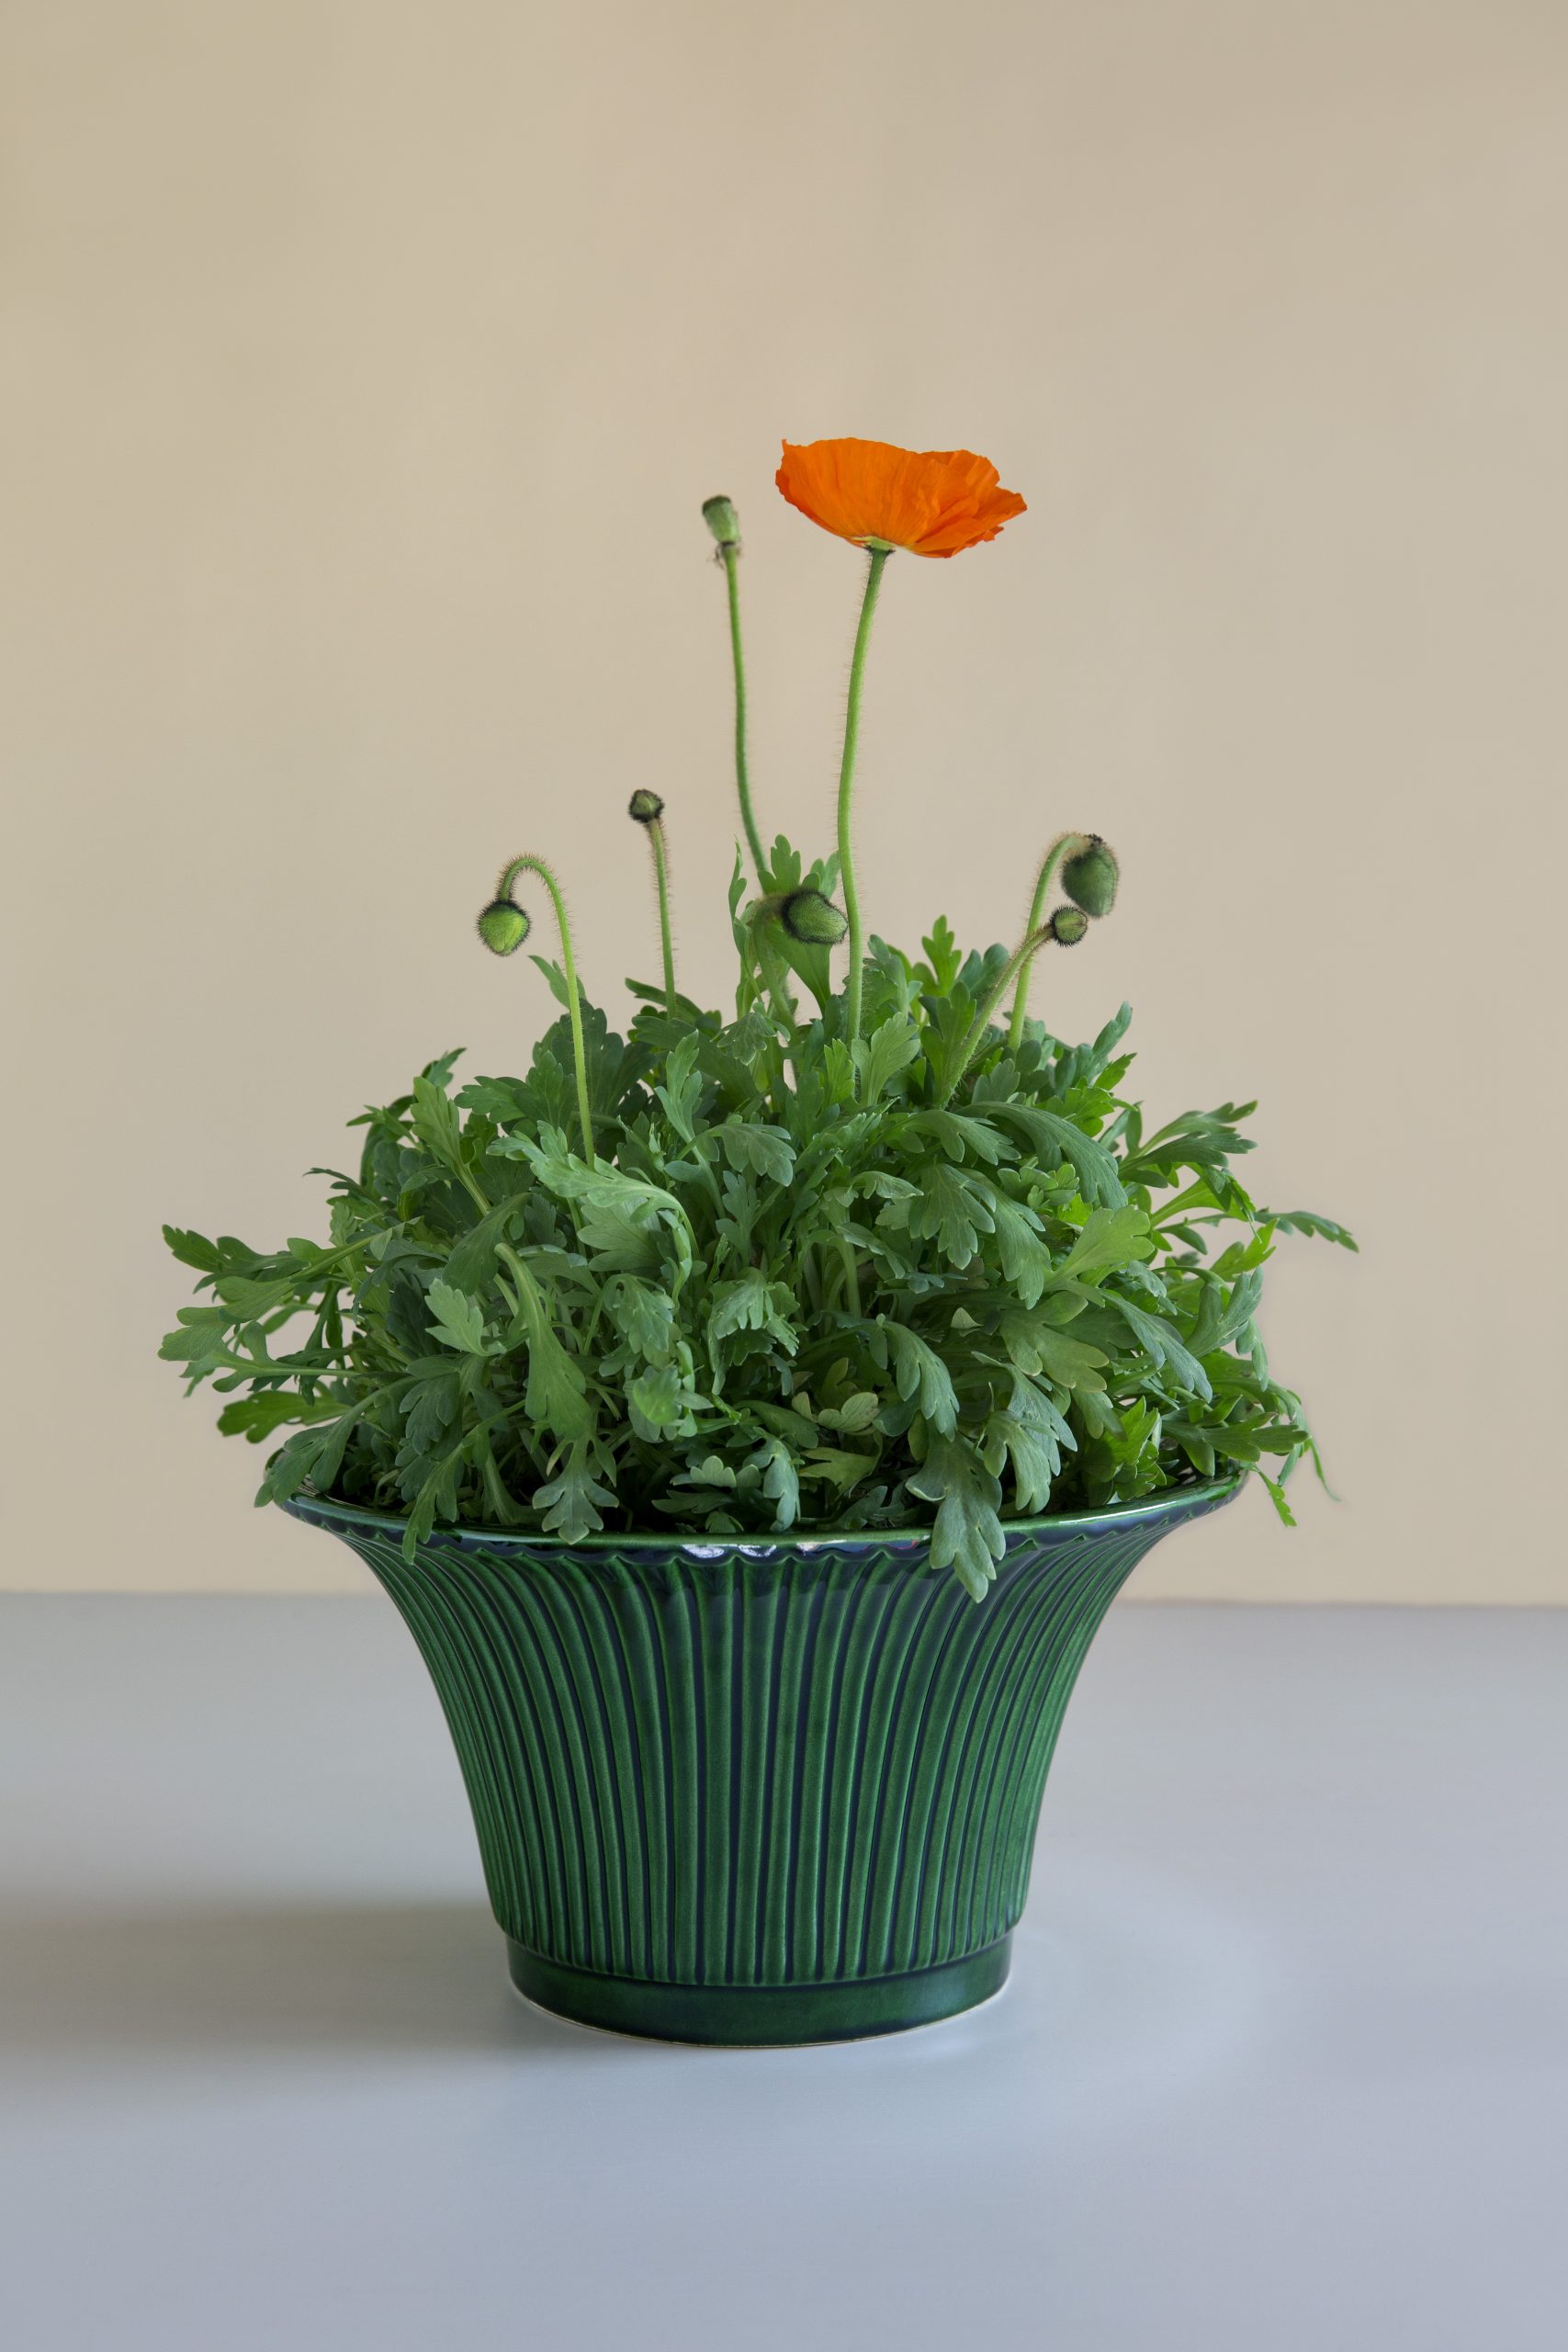 Glazed green standing pot with an orange flower.